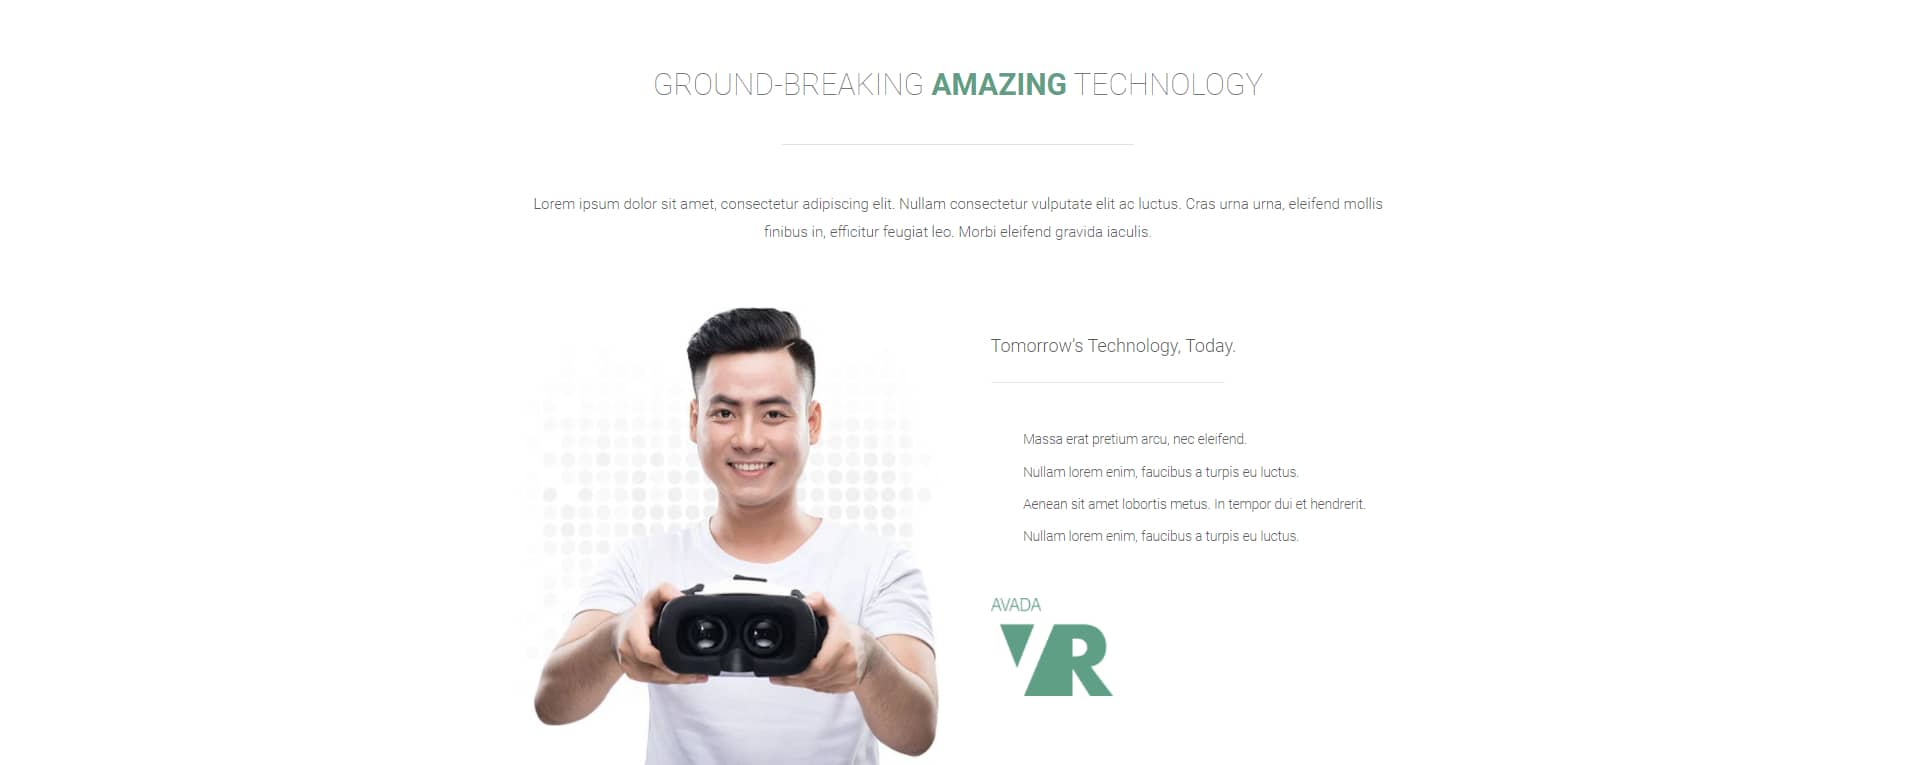 Avada Technology Ground-Breaking Amazing Technology